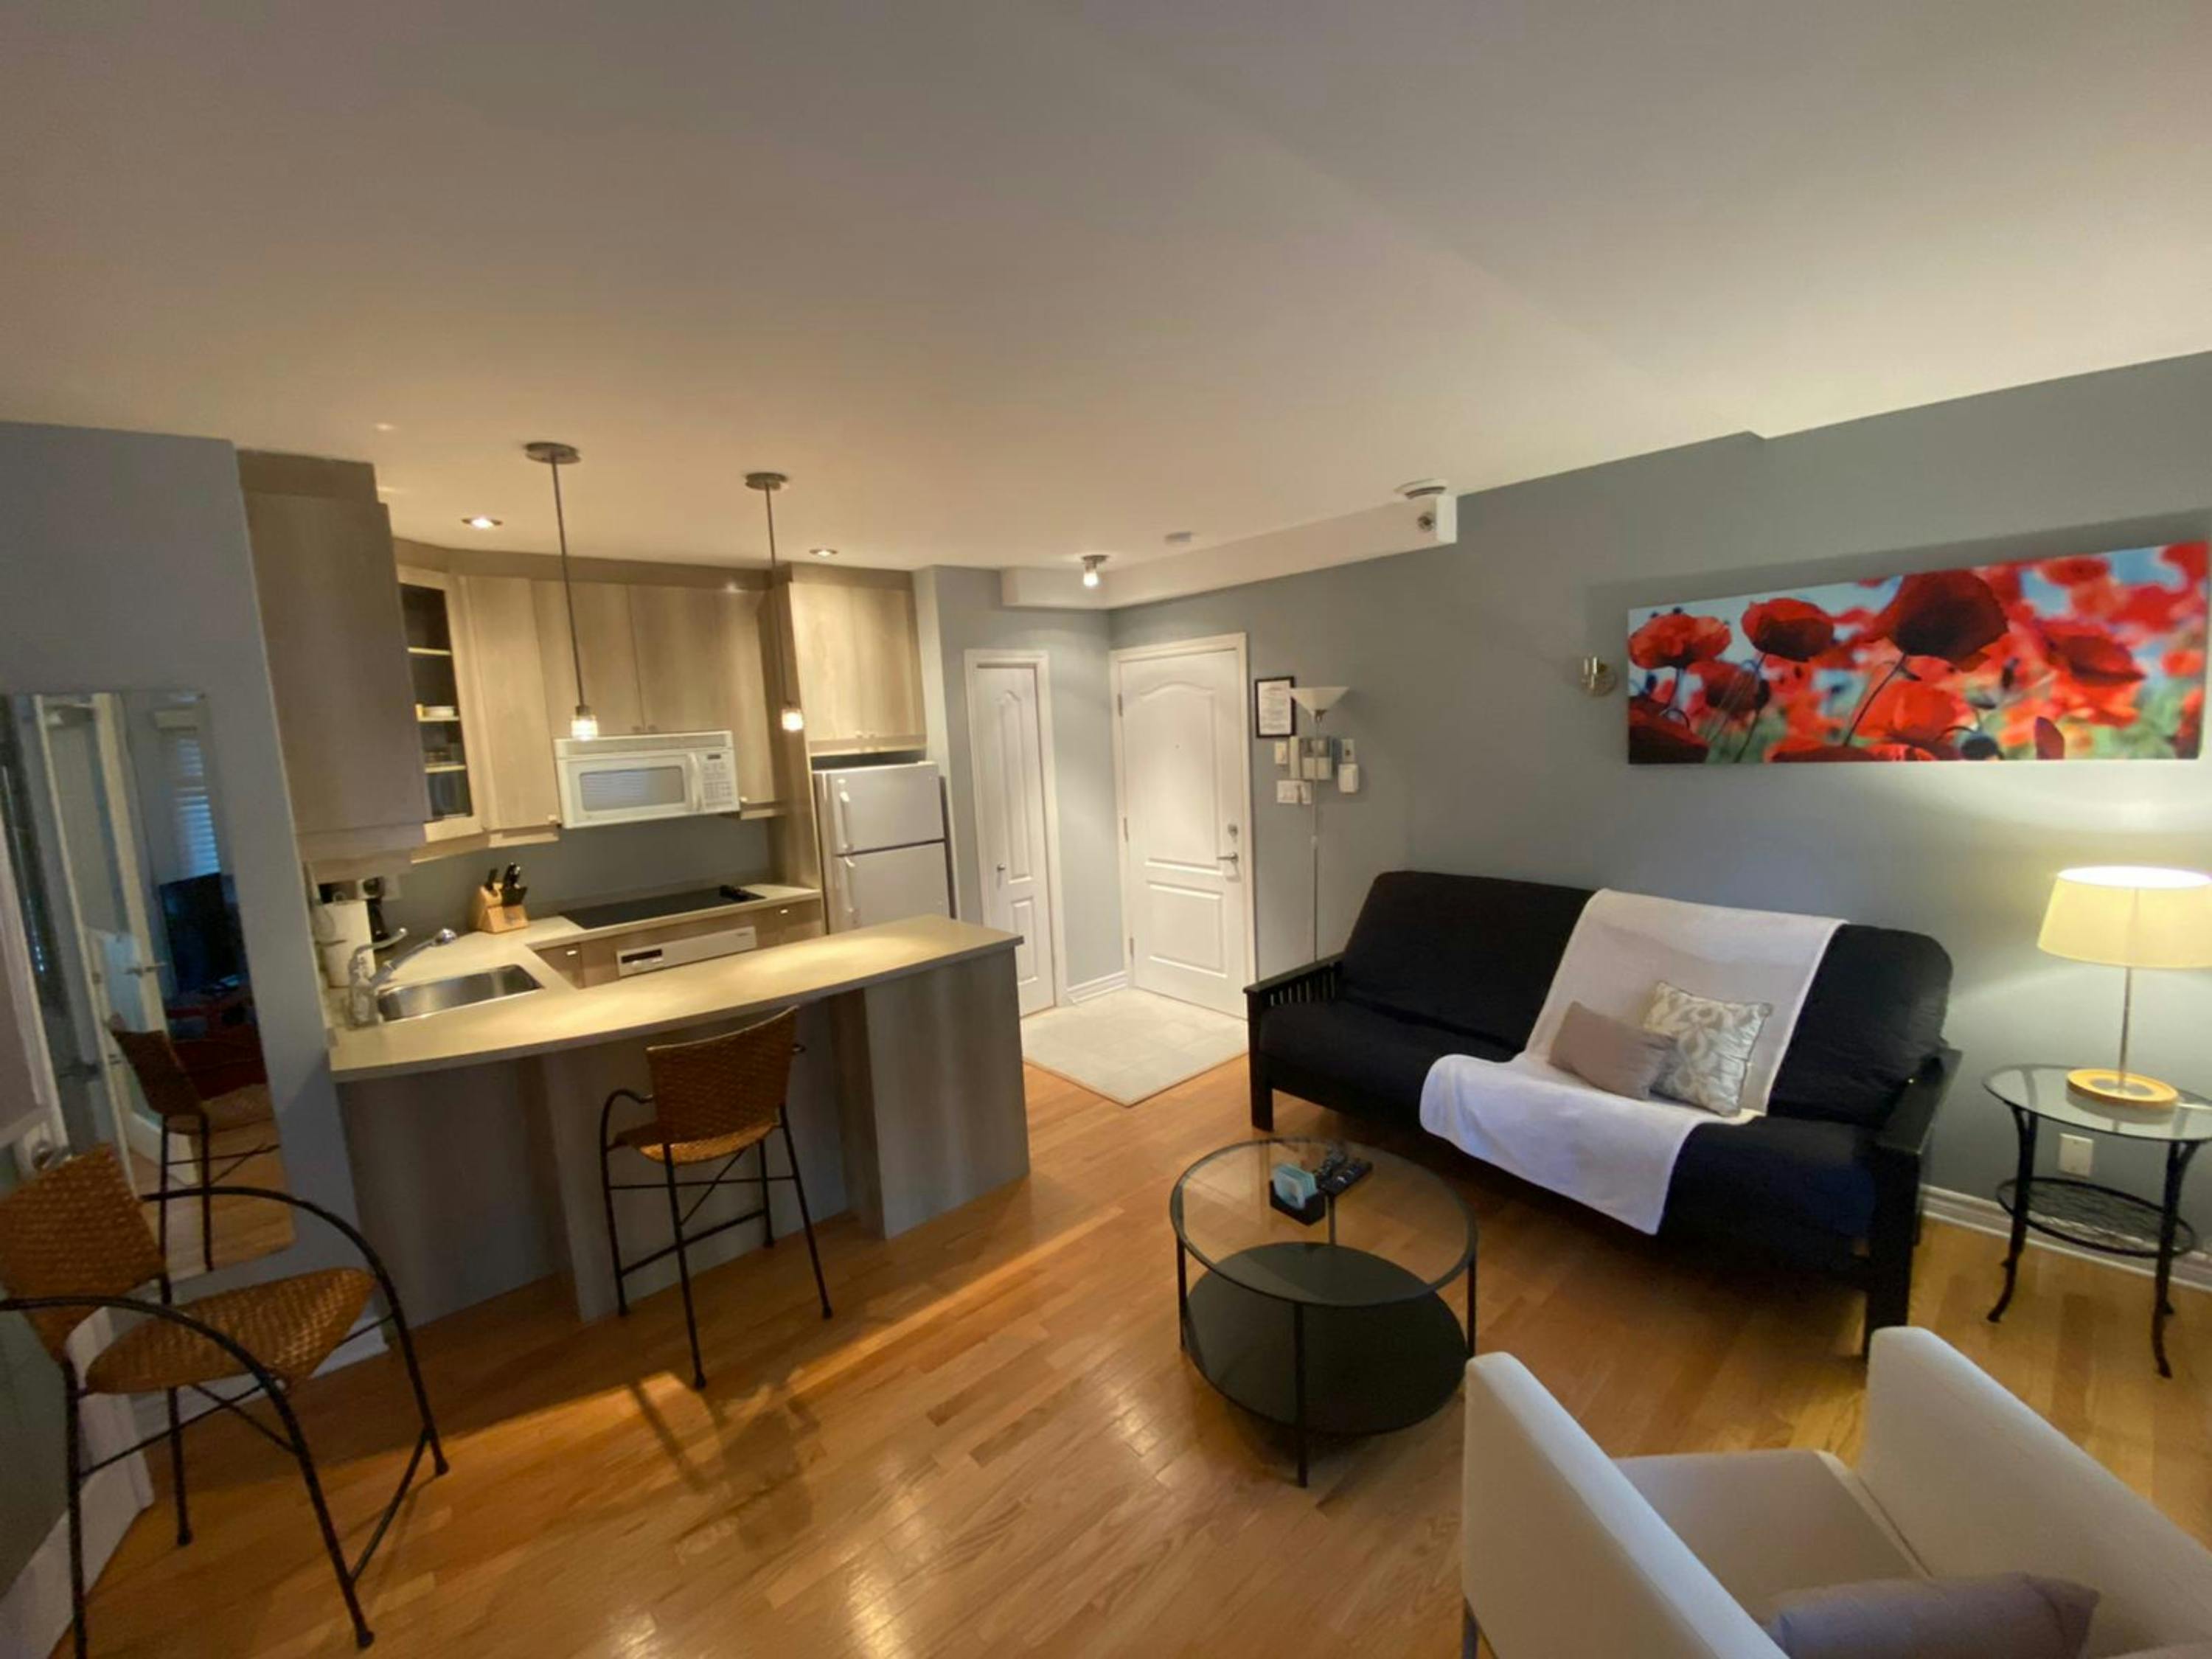 Petit Suite 205 Apart Hotel Montreal Tourist Residence 222512 2115 Rue Saint Urbain H2X 2N1 #aparthotelmontreal